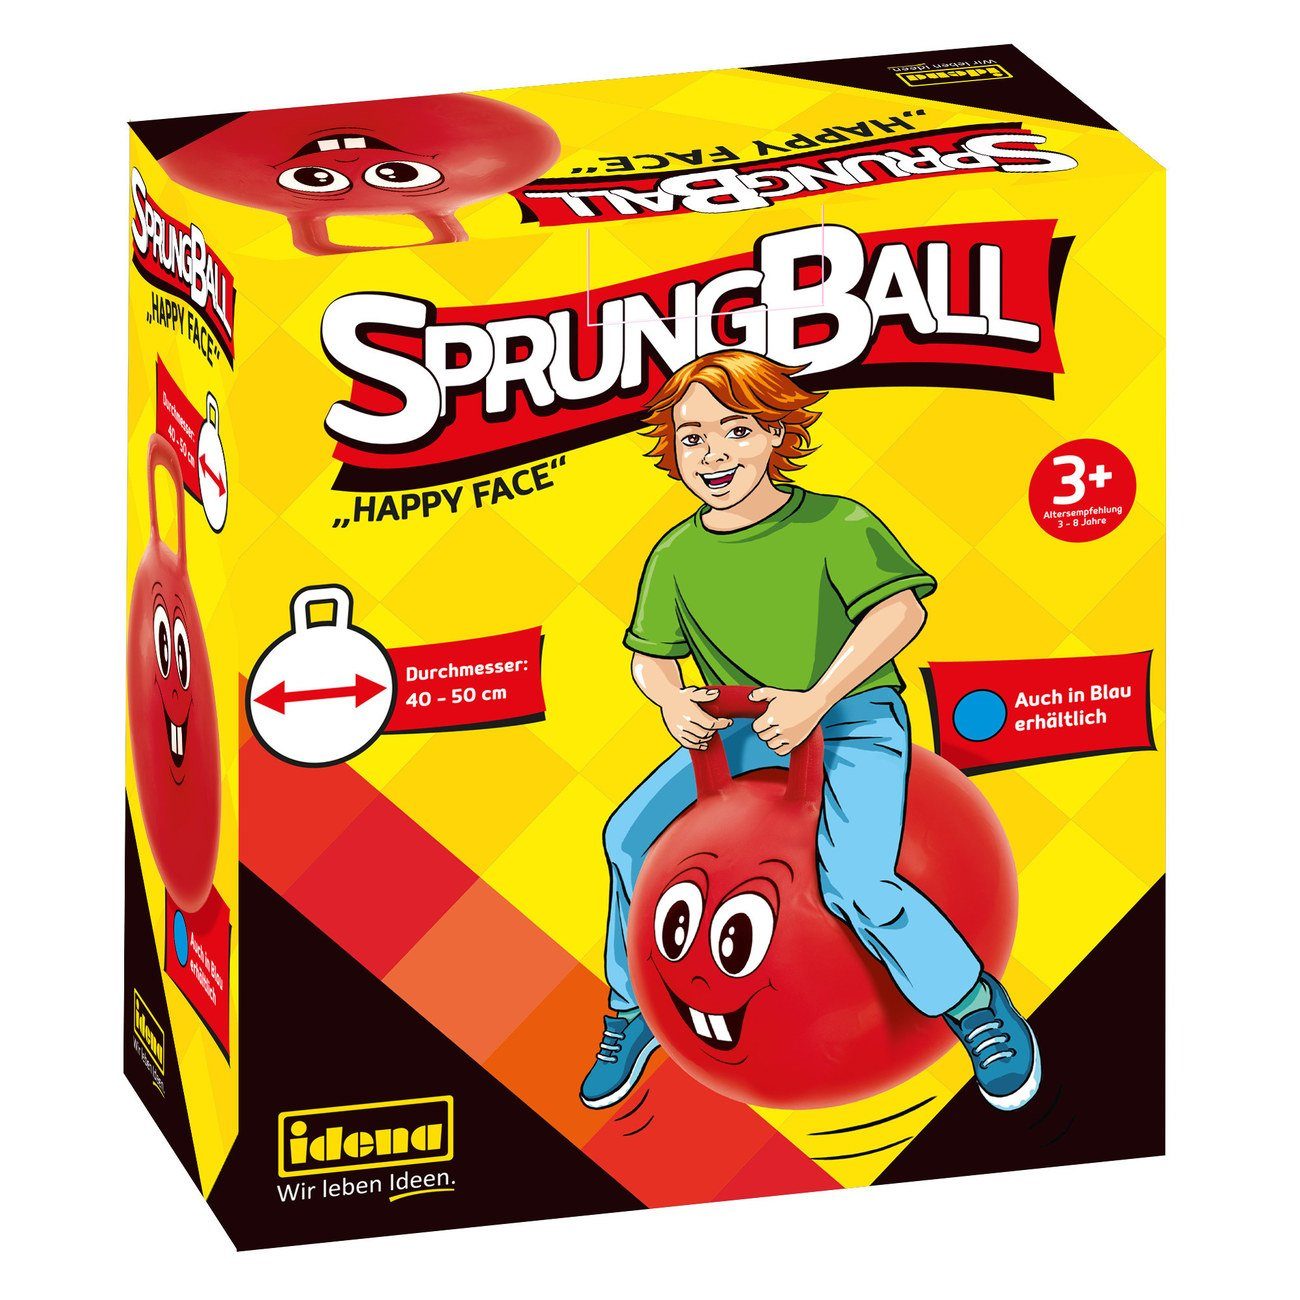 Springball Face" 50 40 - rot ø "Happy Hüpfball Hüpfball, cm Sprungball cm Idena Idena